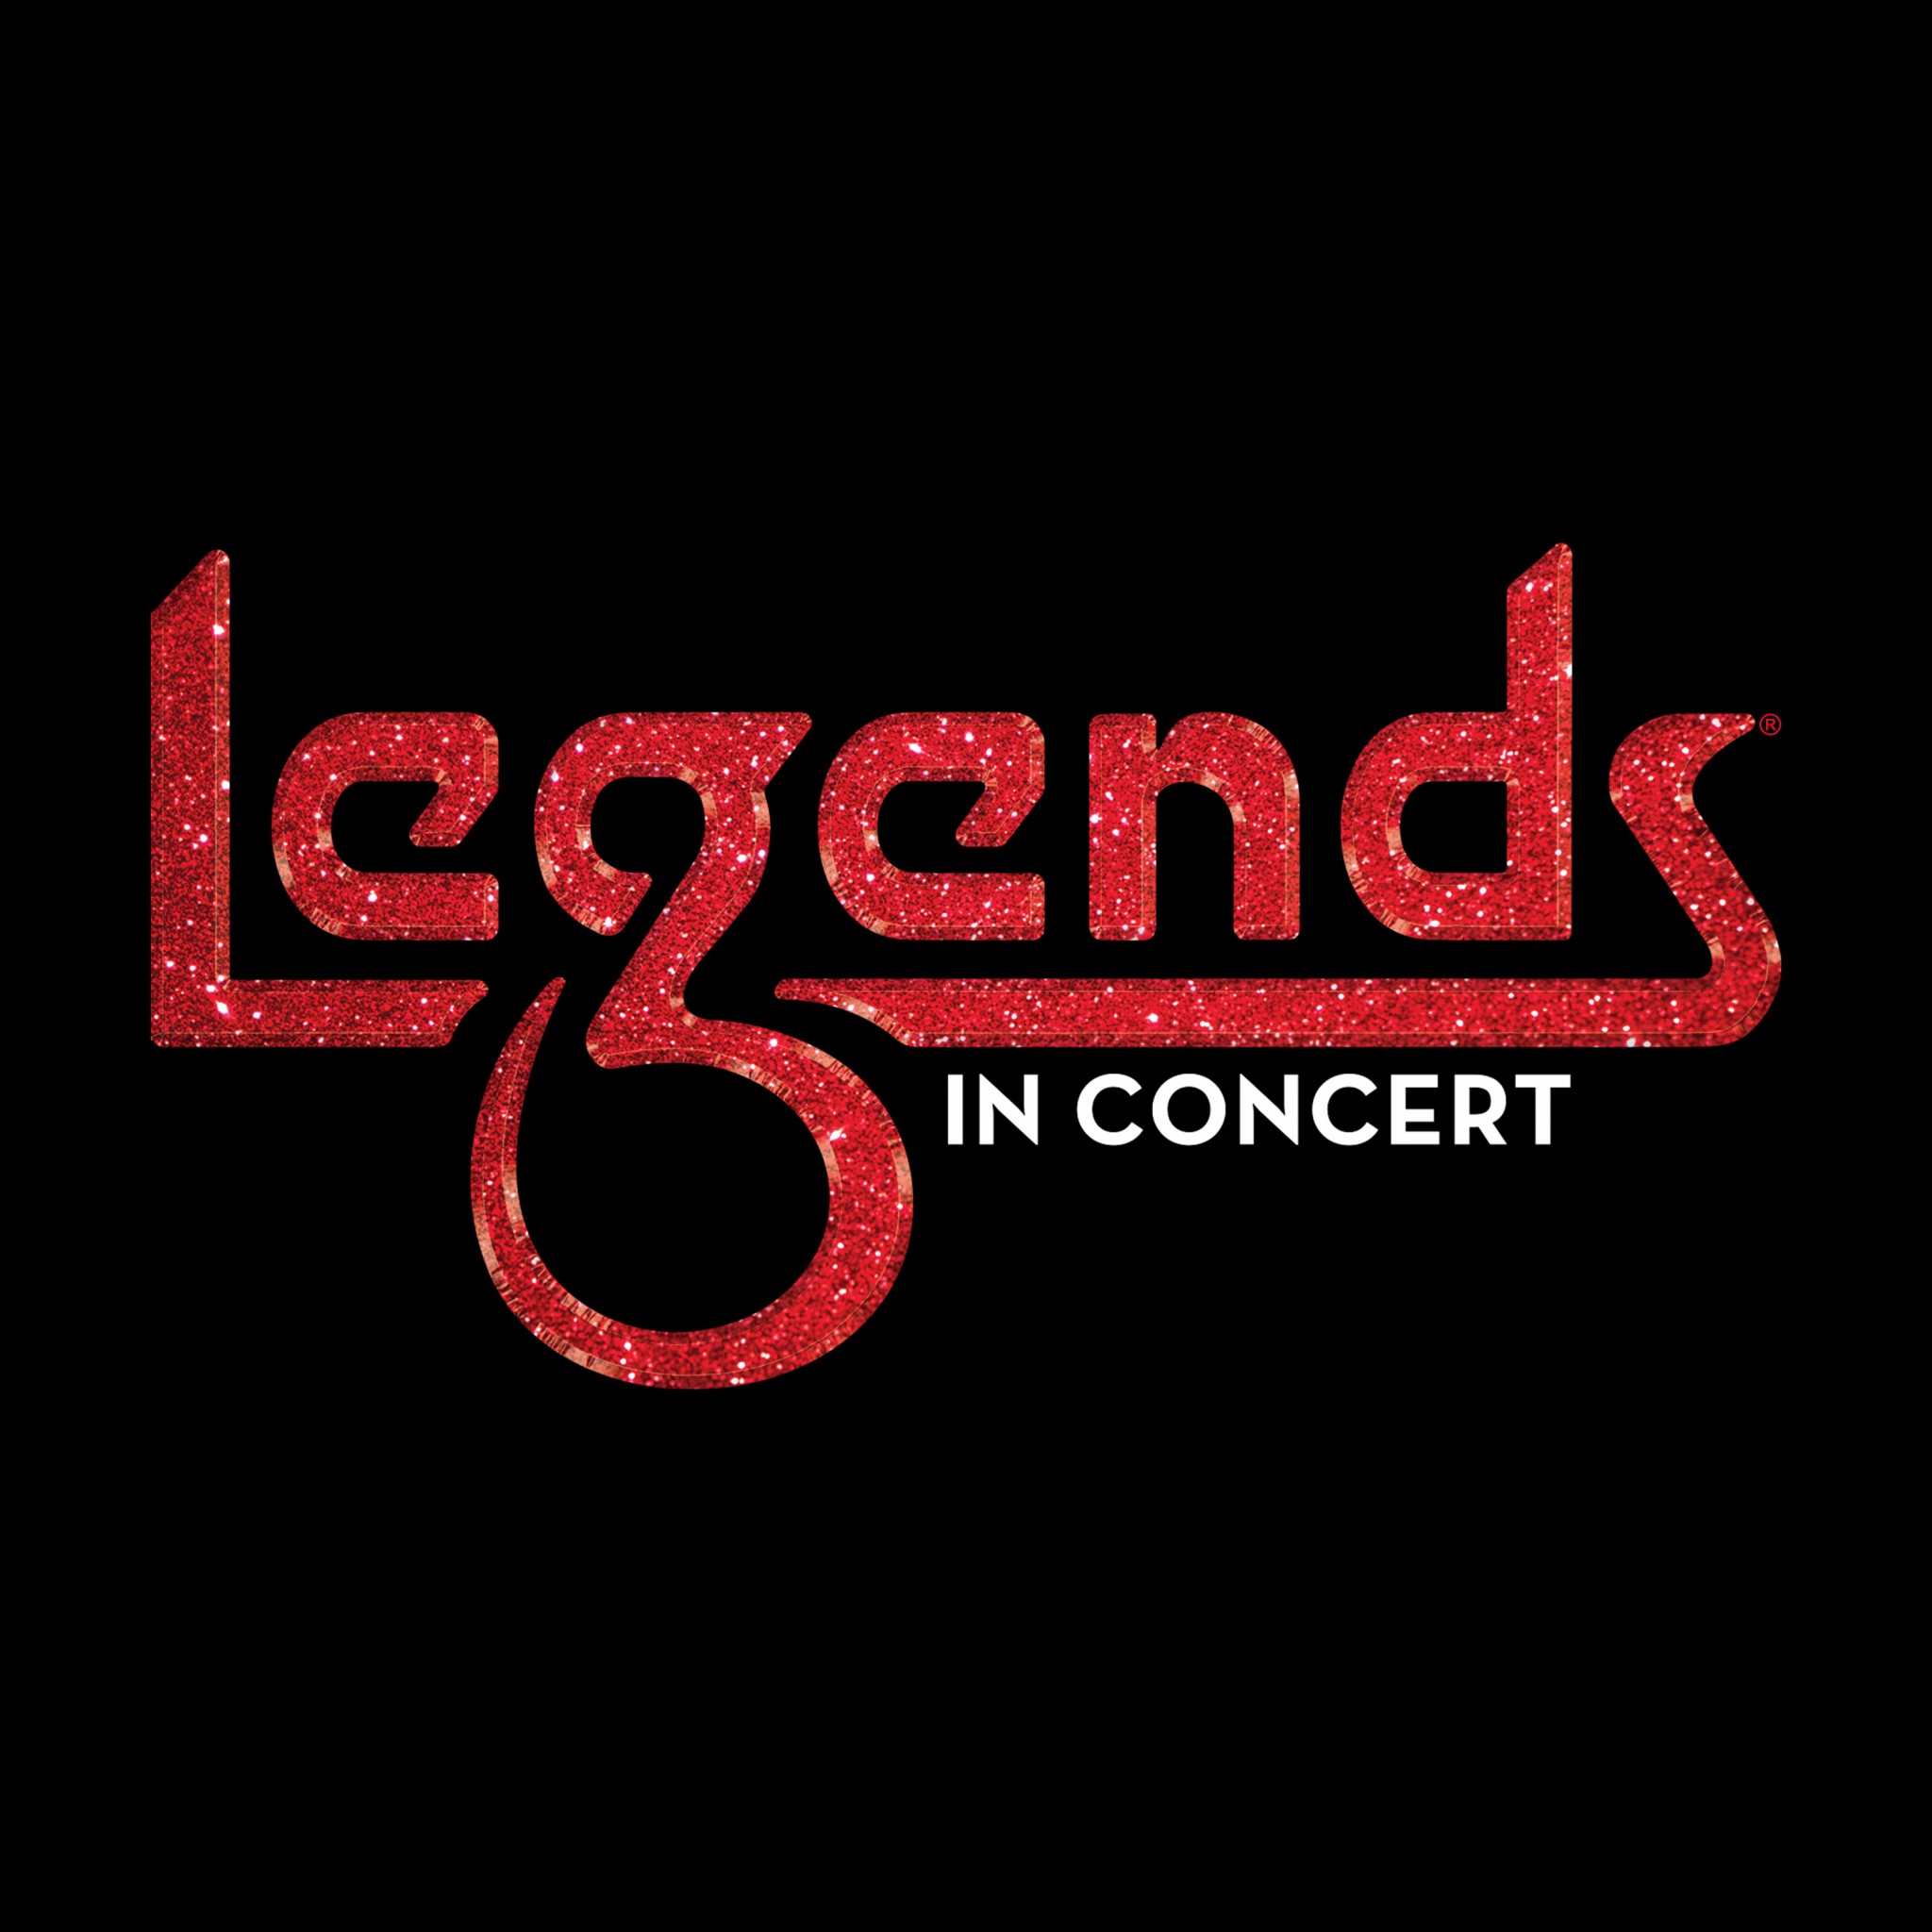 "Legends in Concert" Opens Monday At New Home VegasChanges